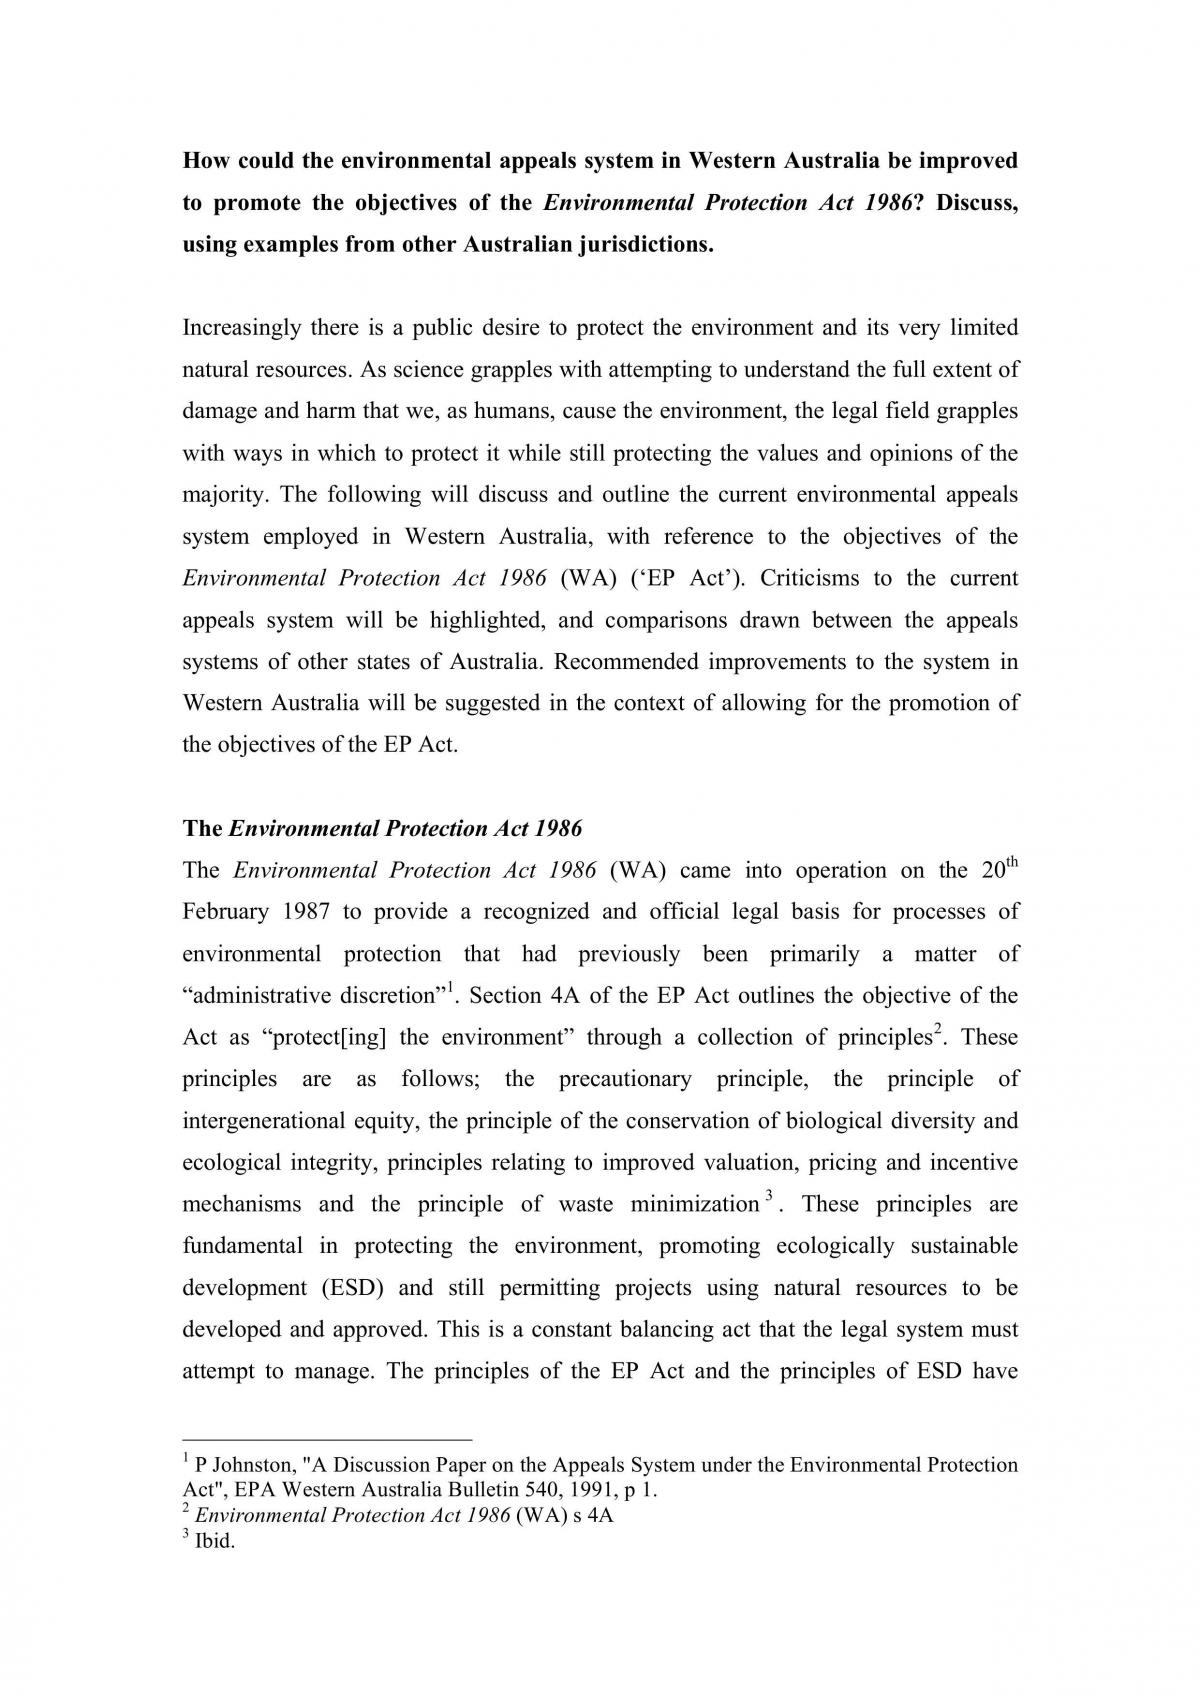 dissertation environmental law